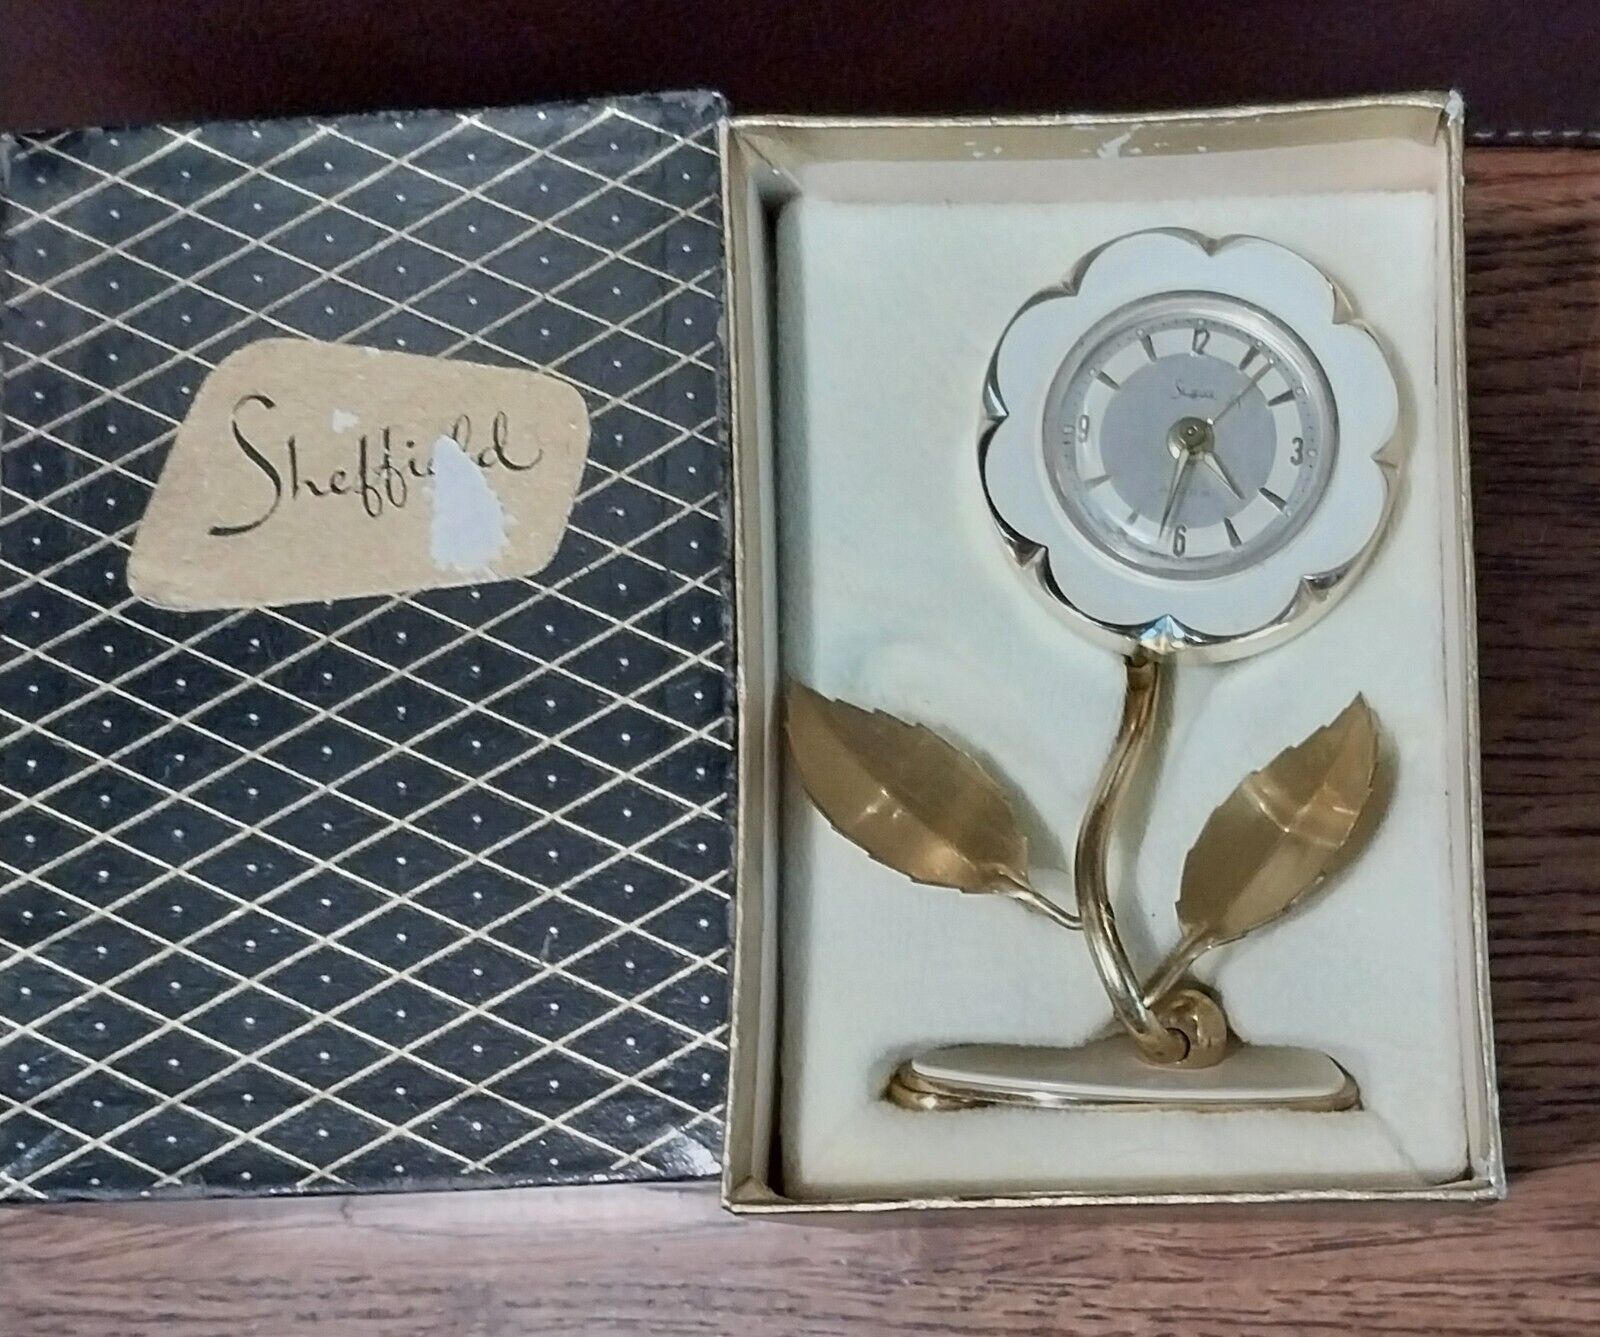 Vintage White Enamel and Brass Sheffield Flower Alarm Clock